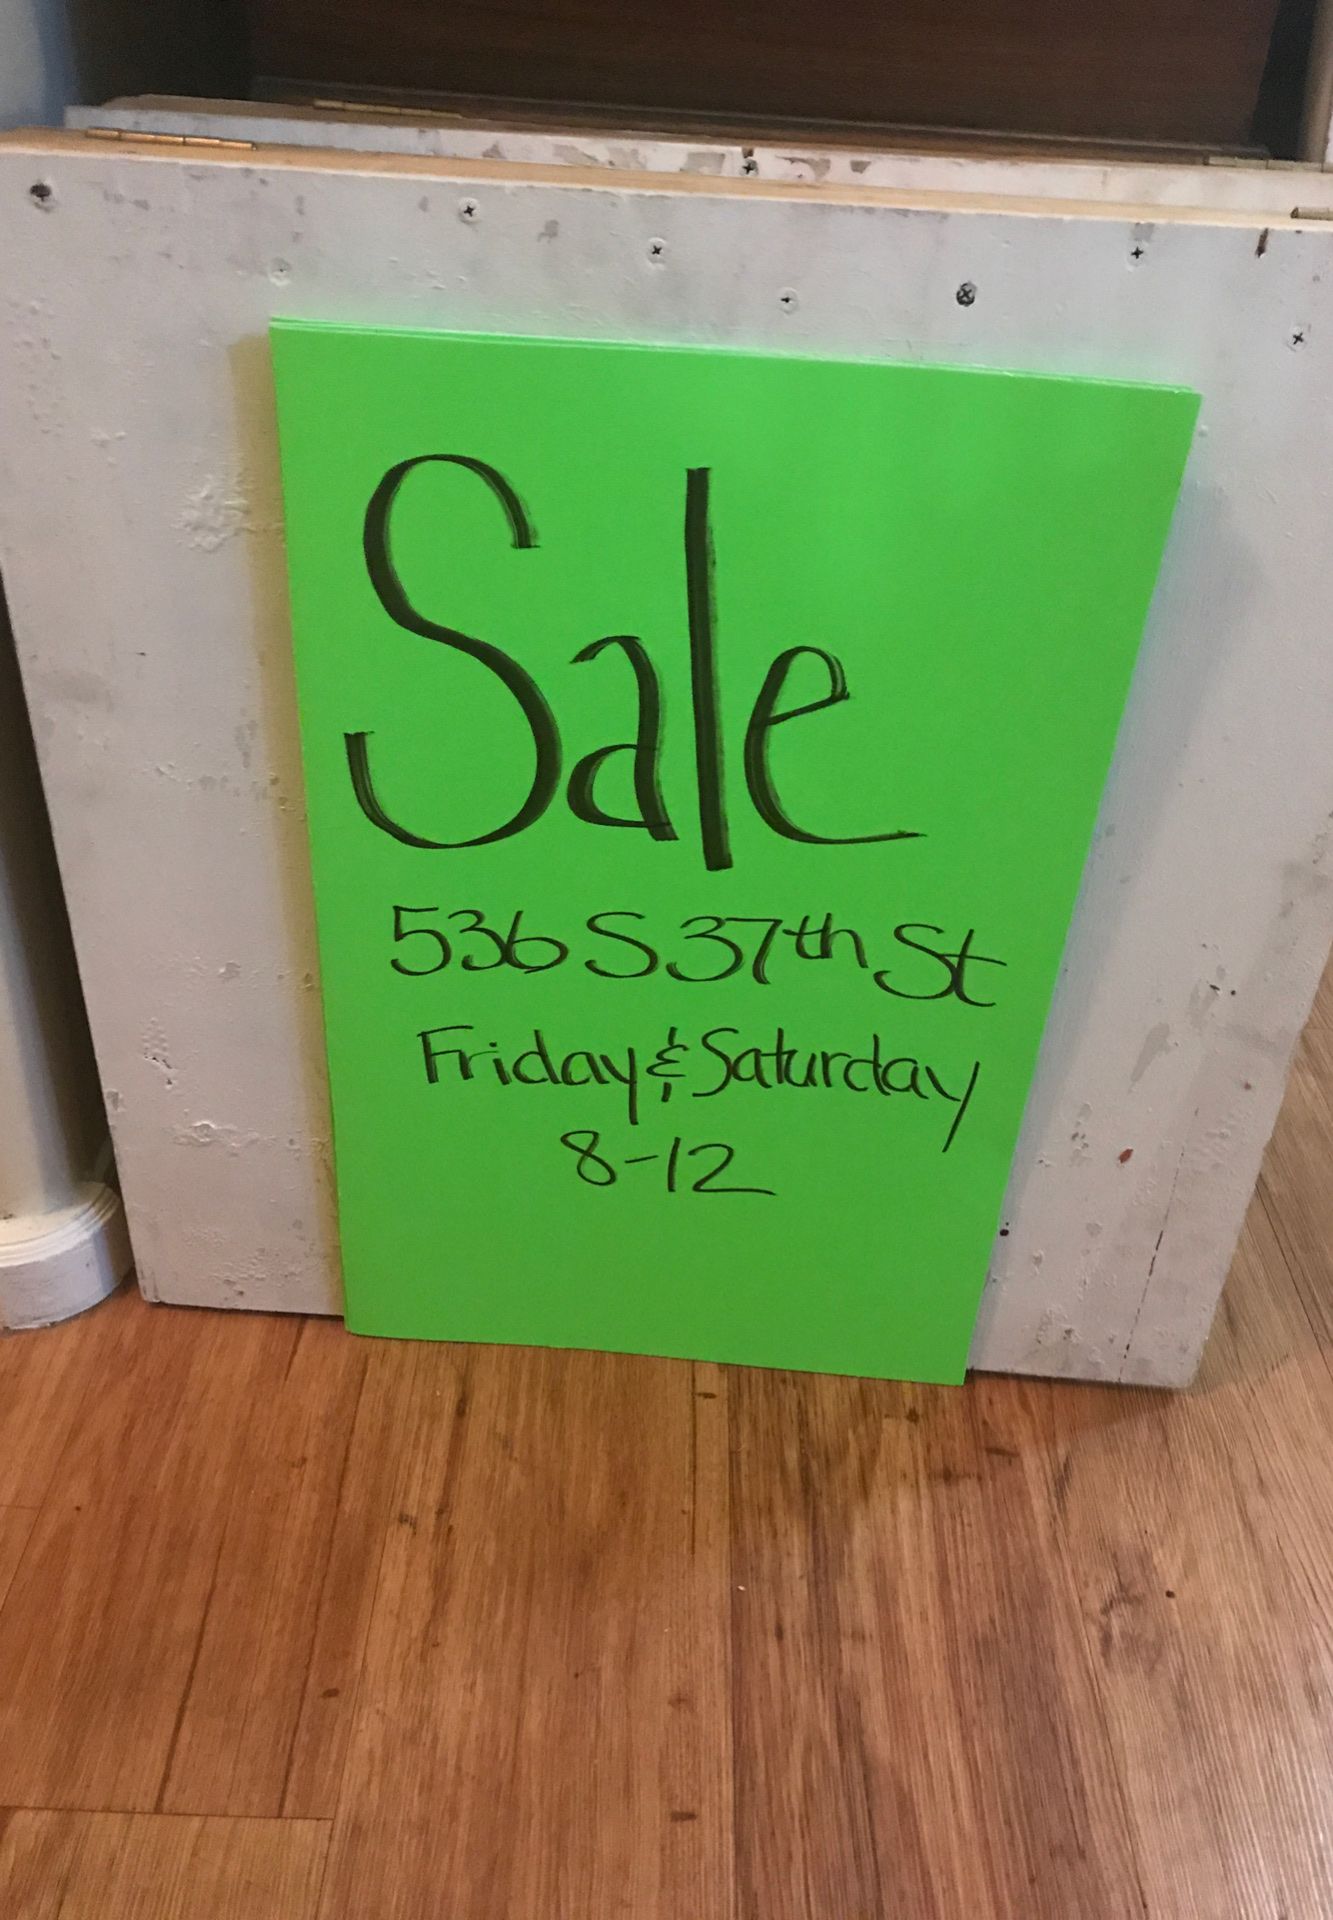 Multi Family Sale. Friday and Saturday 8 to 12 Mesa Az